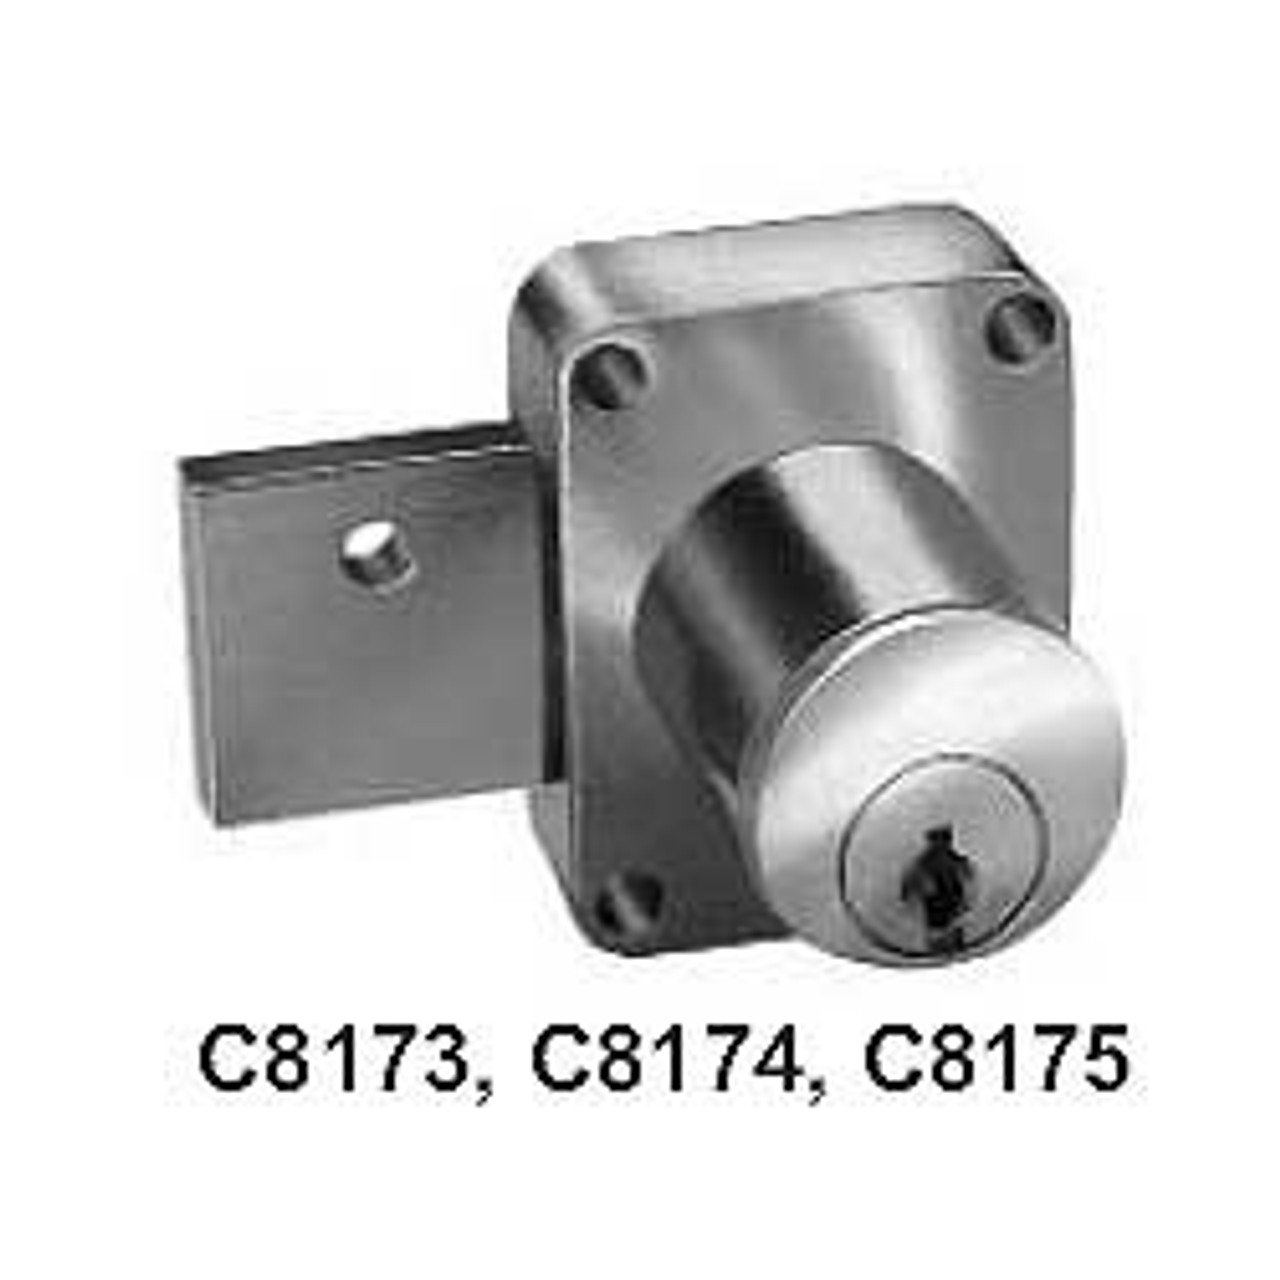 C8747 Cabinet and Handle Locks